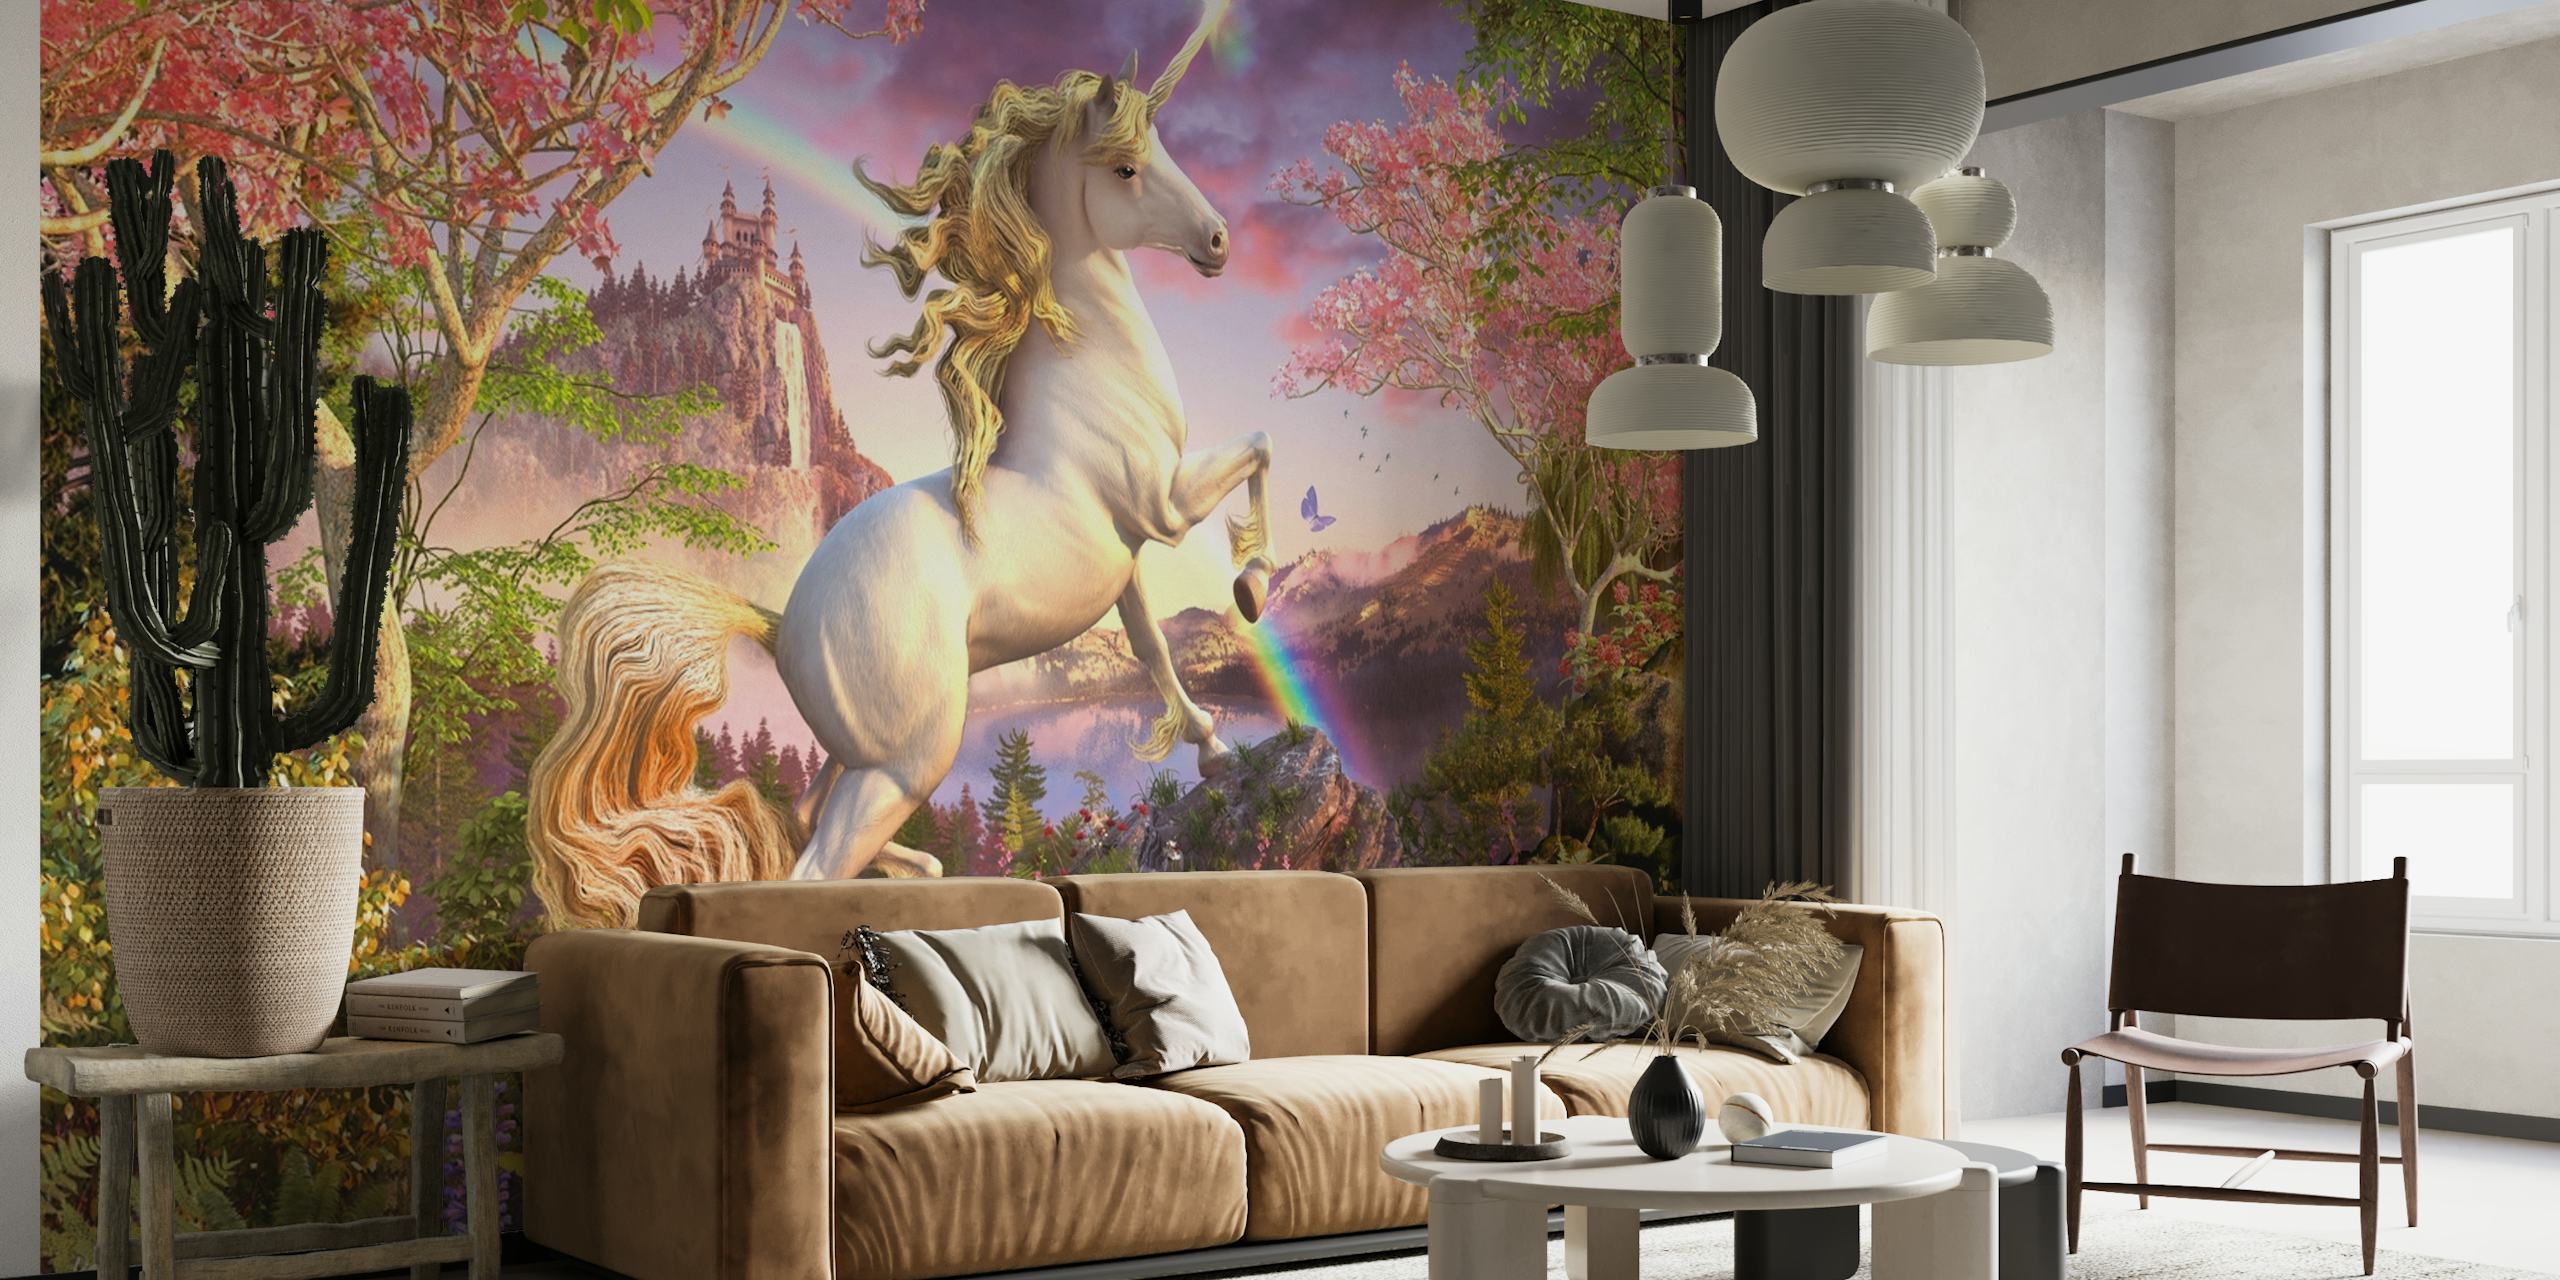 Awesome Unicorn papiers peint